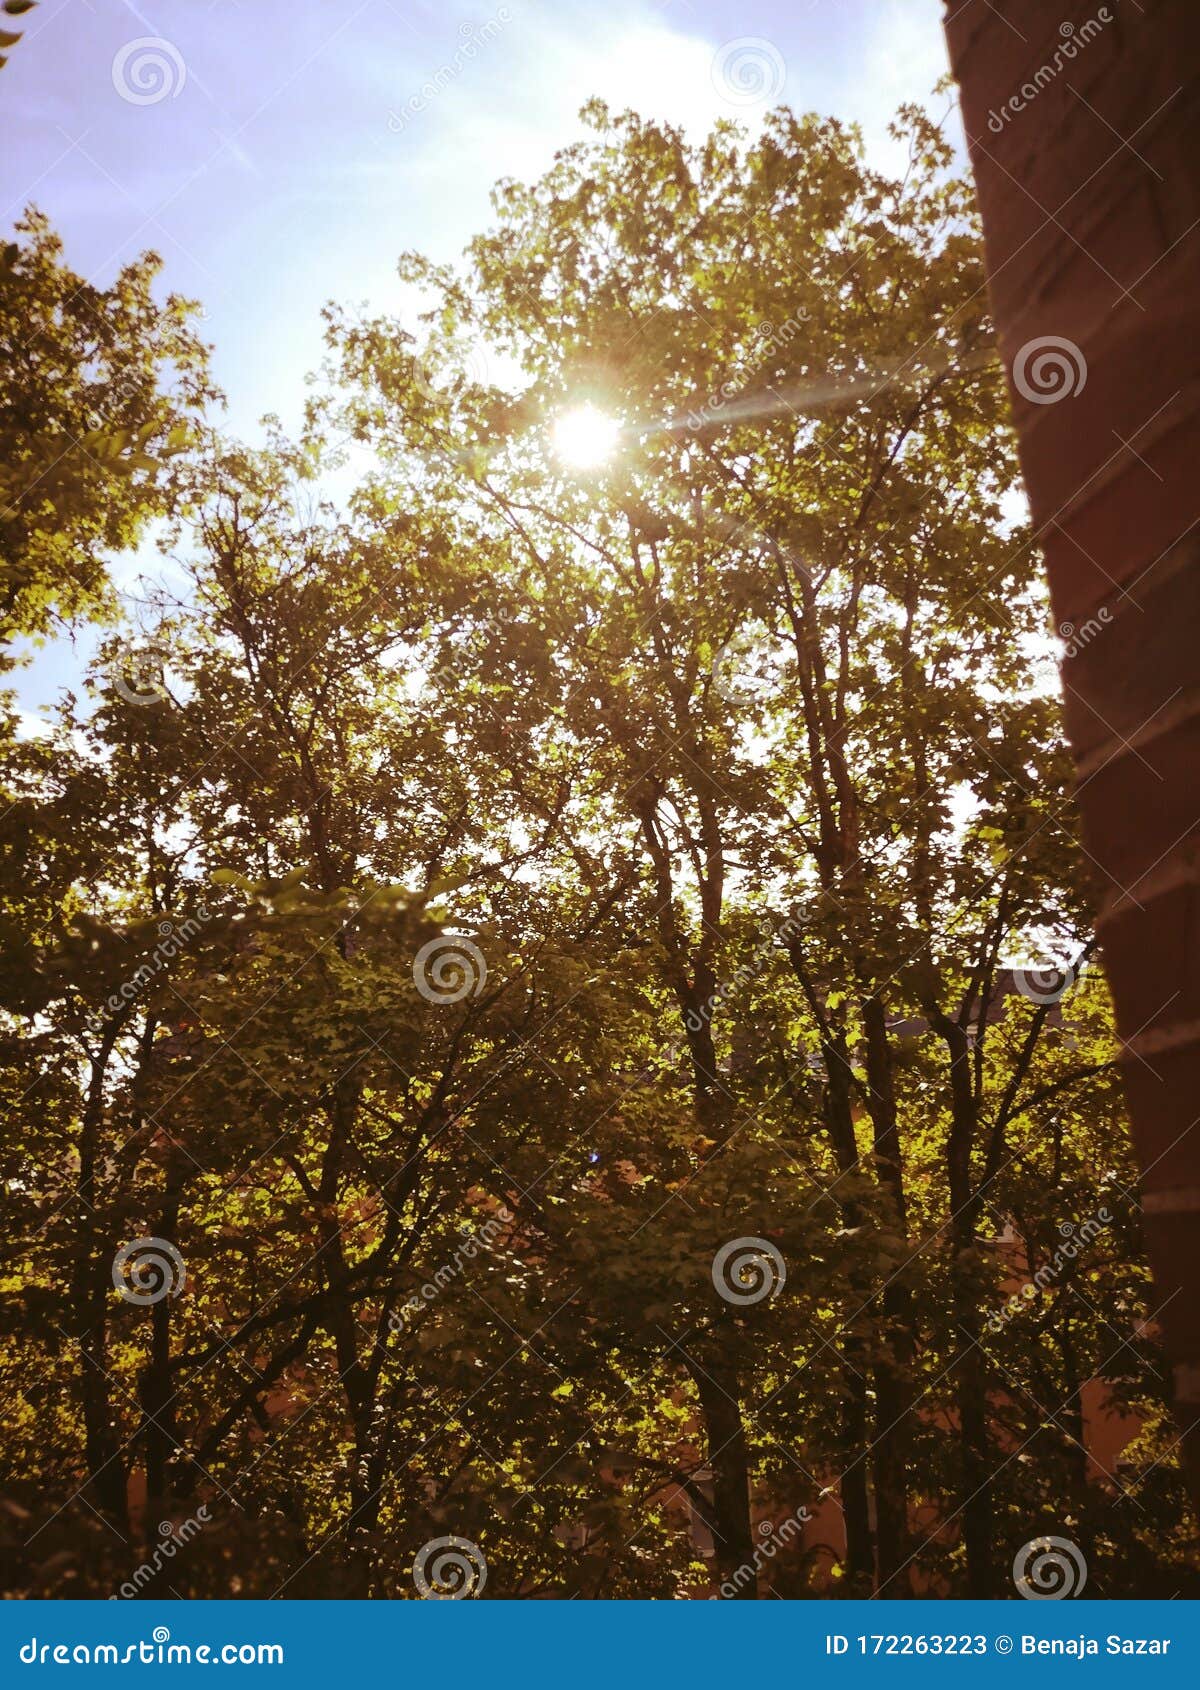 sun is shining trough tree efect